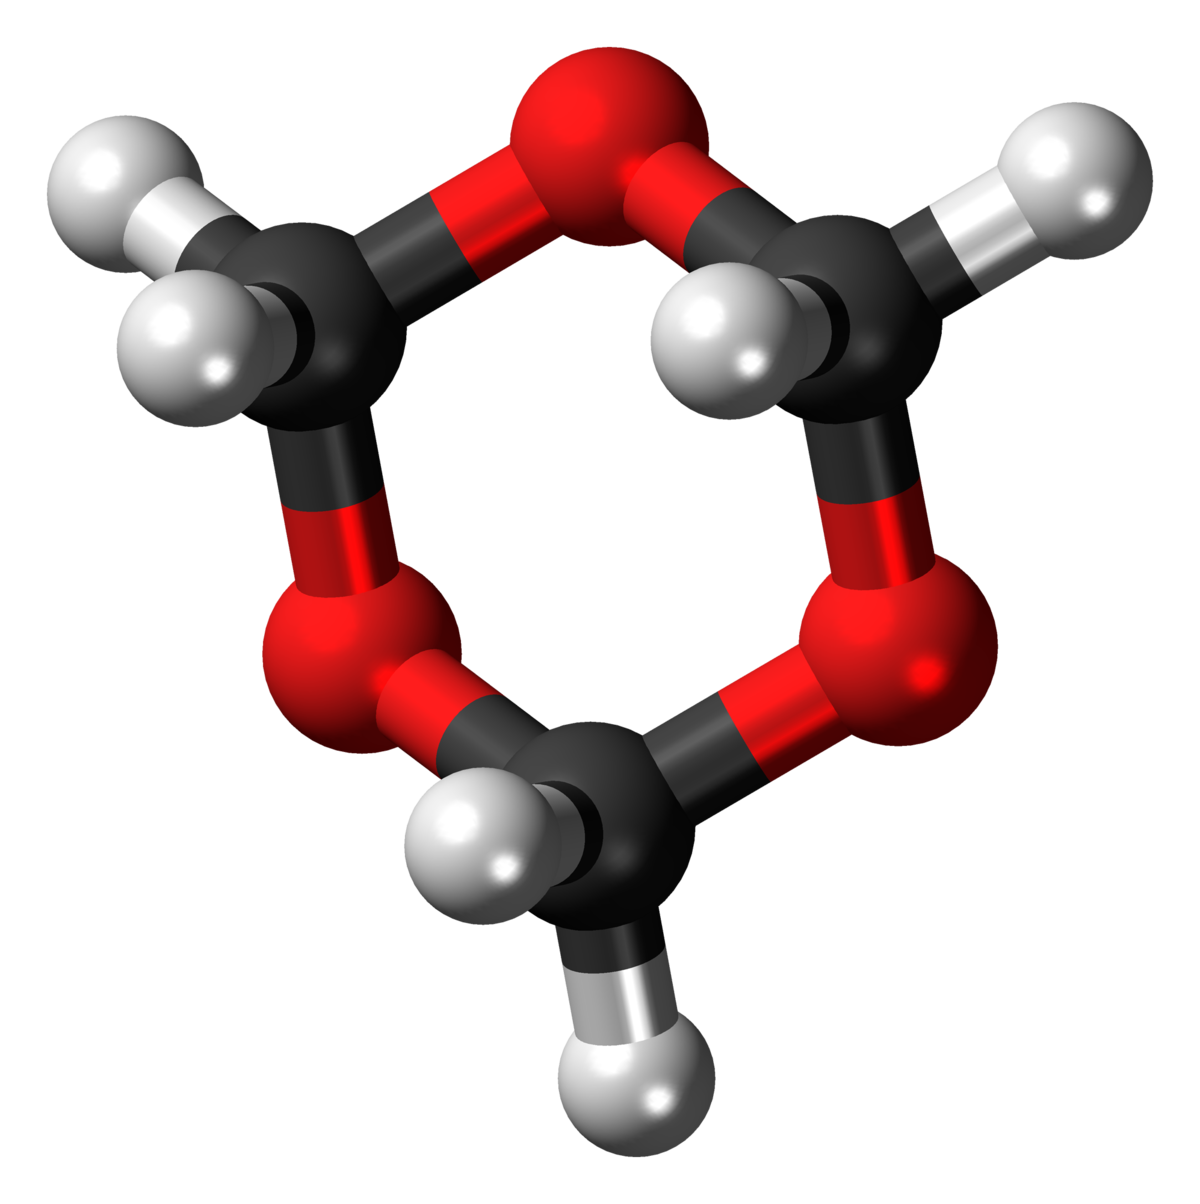 1,3,5-Trioxane - Wikipedia